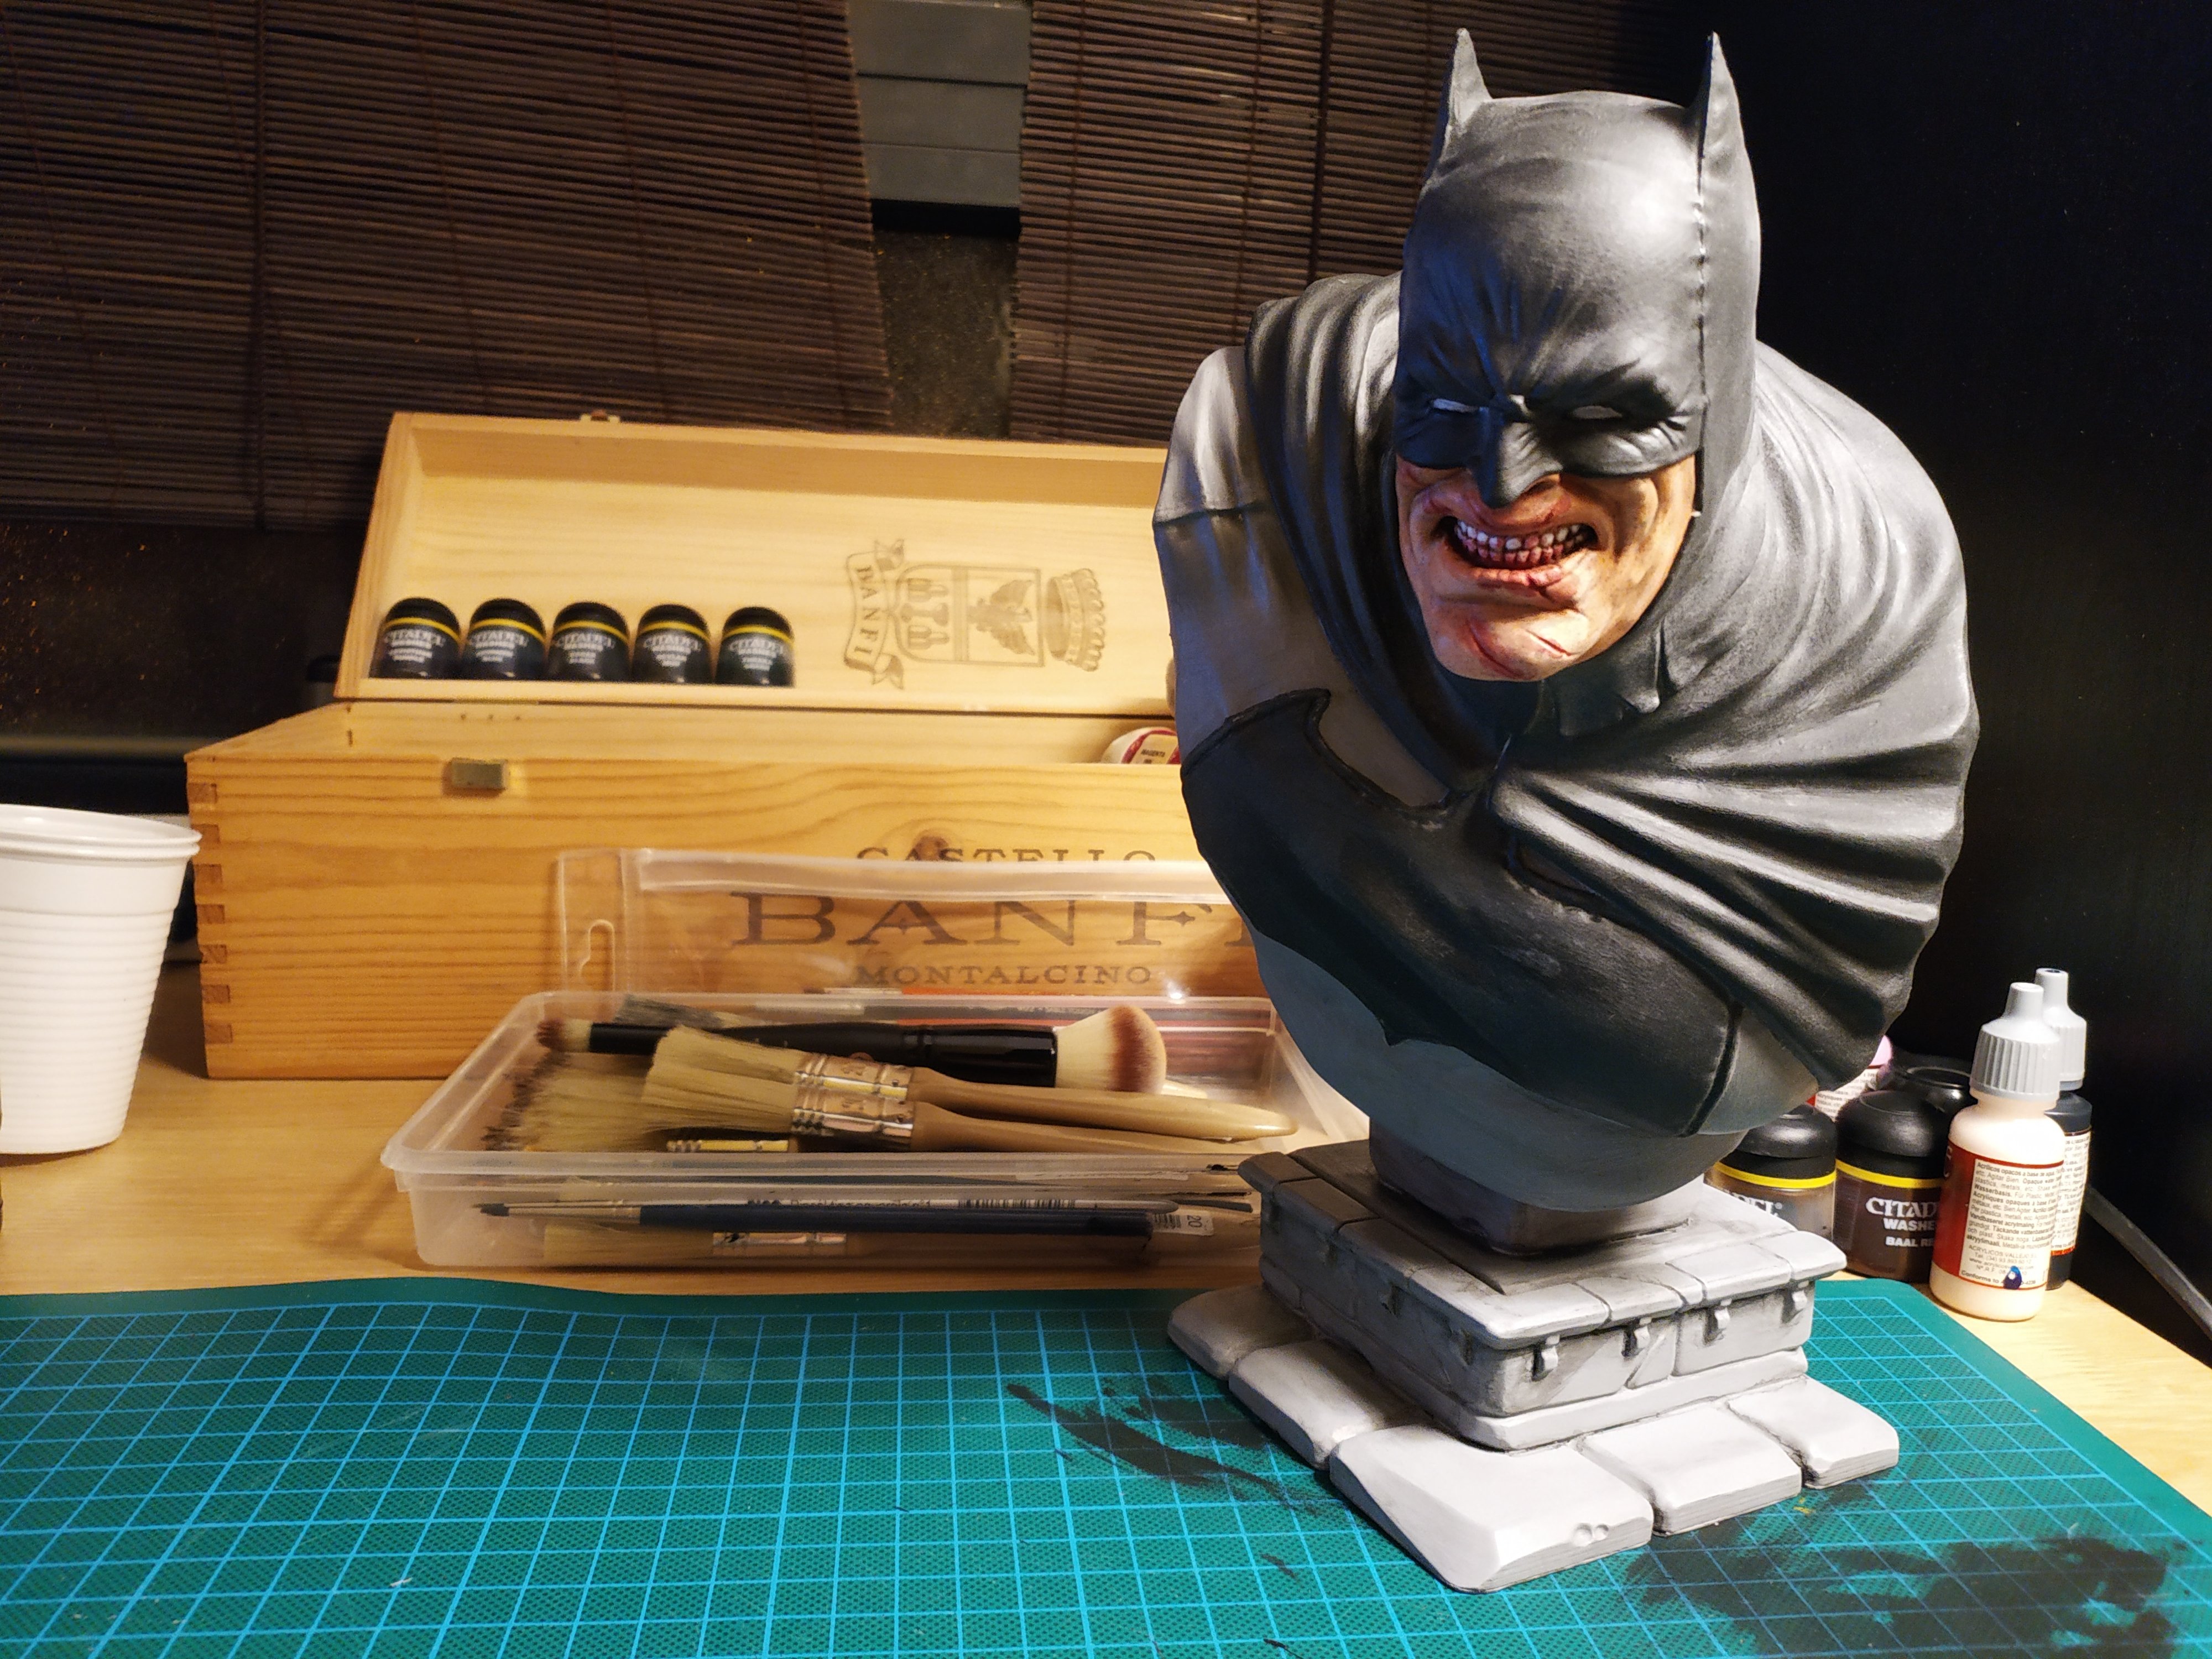 The Dark Knight bust by David Östman